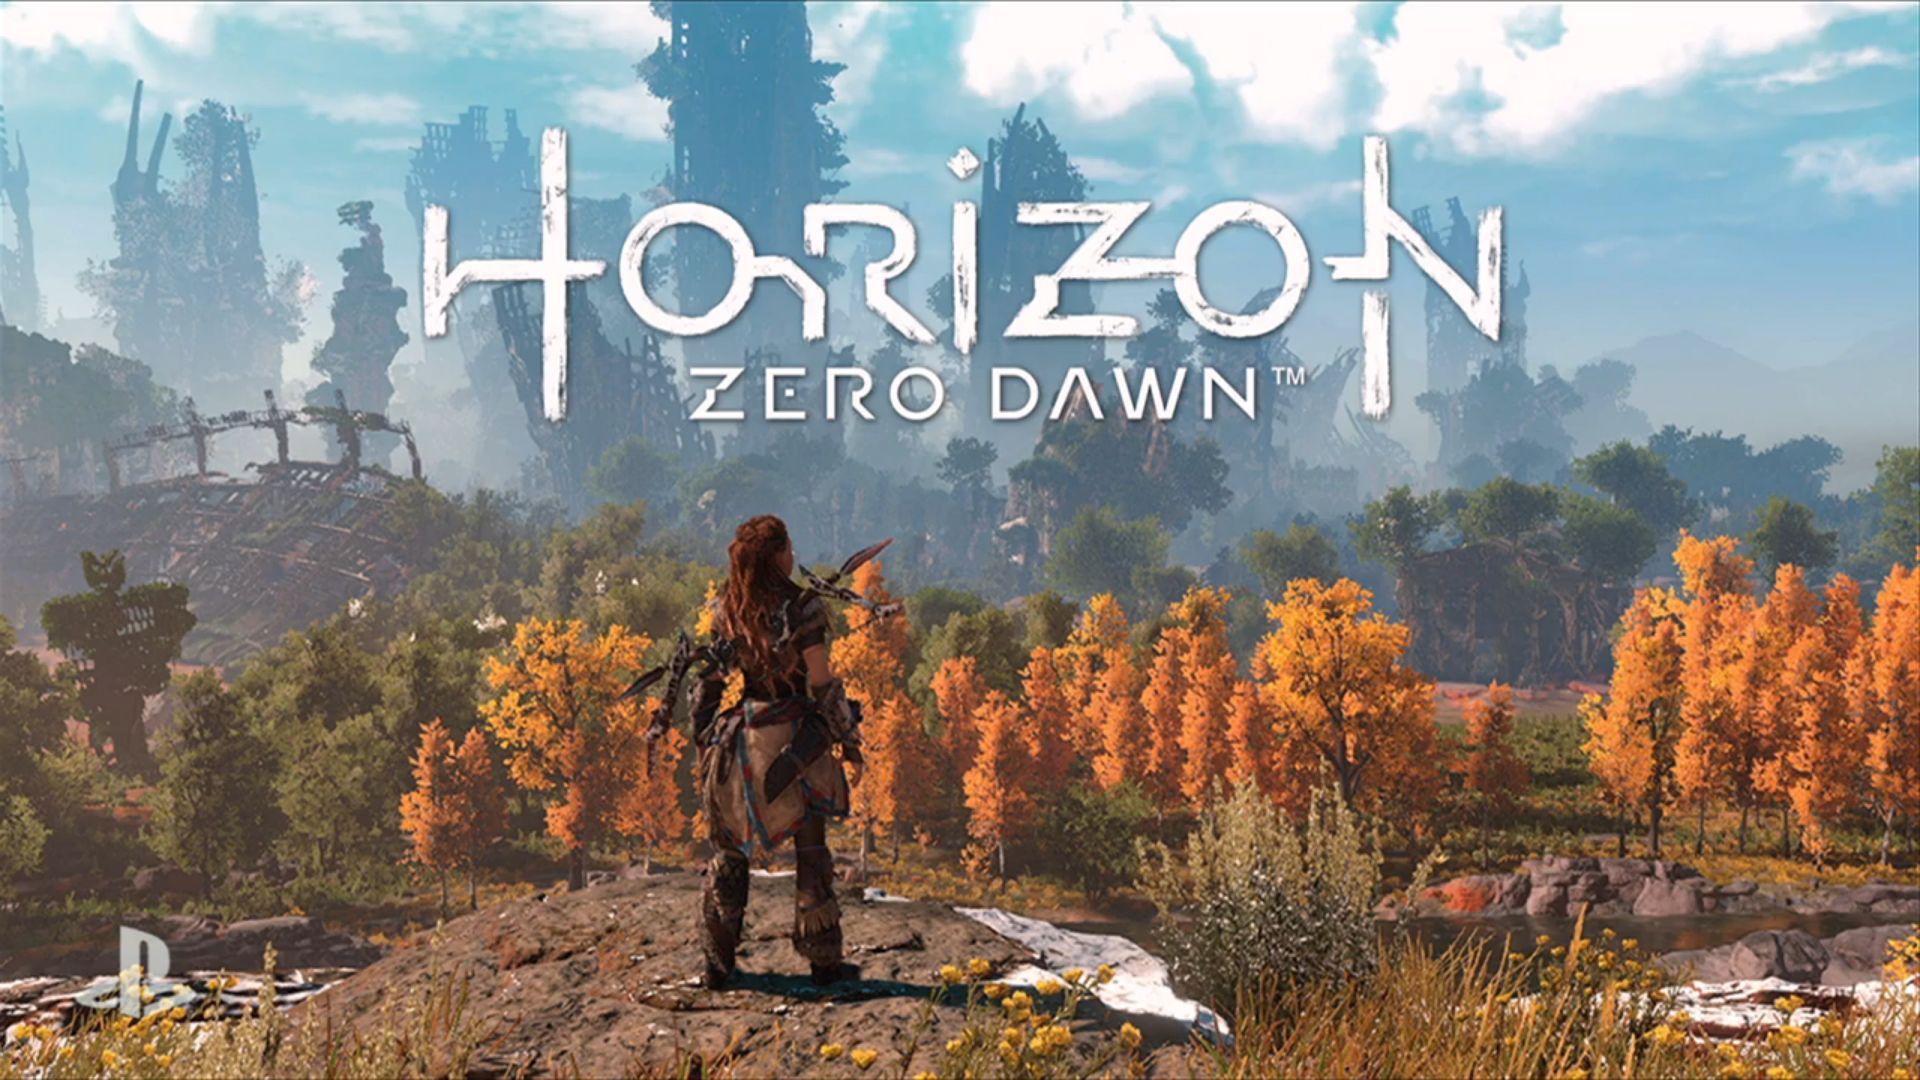 Horizon: Zero Dawn Wallpaper Image Photo Picture Background